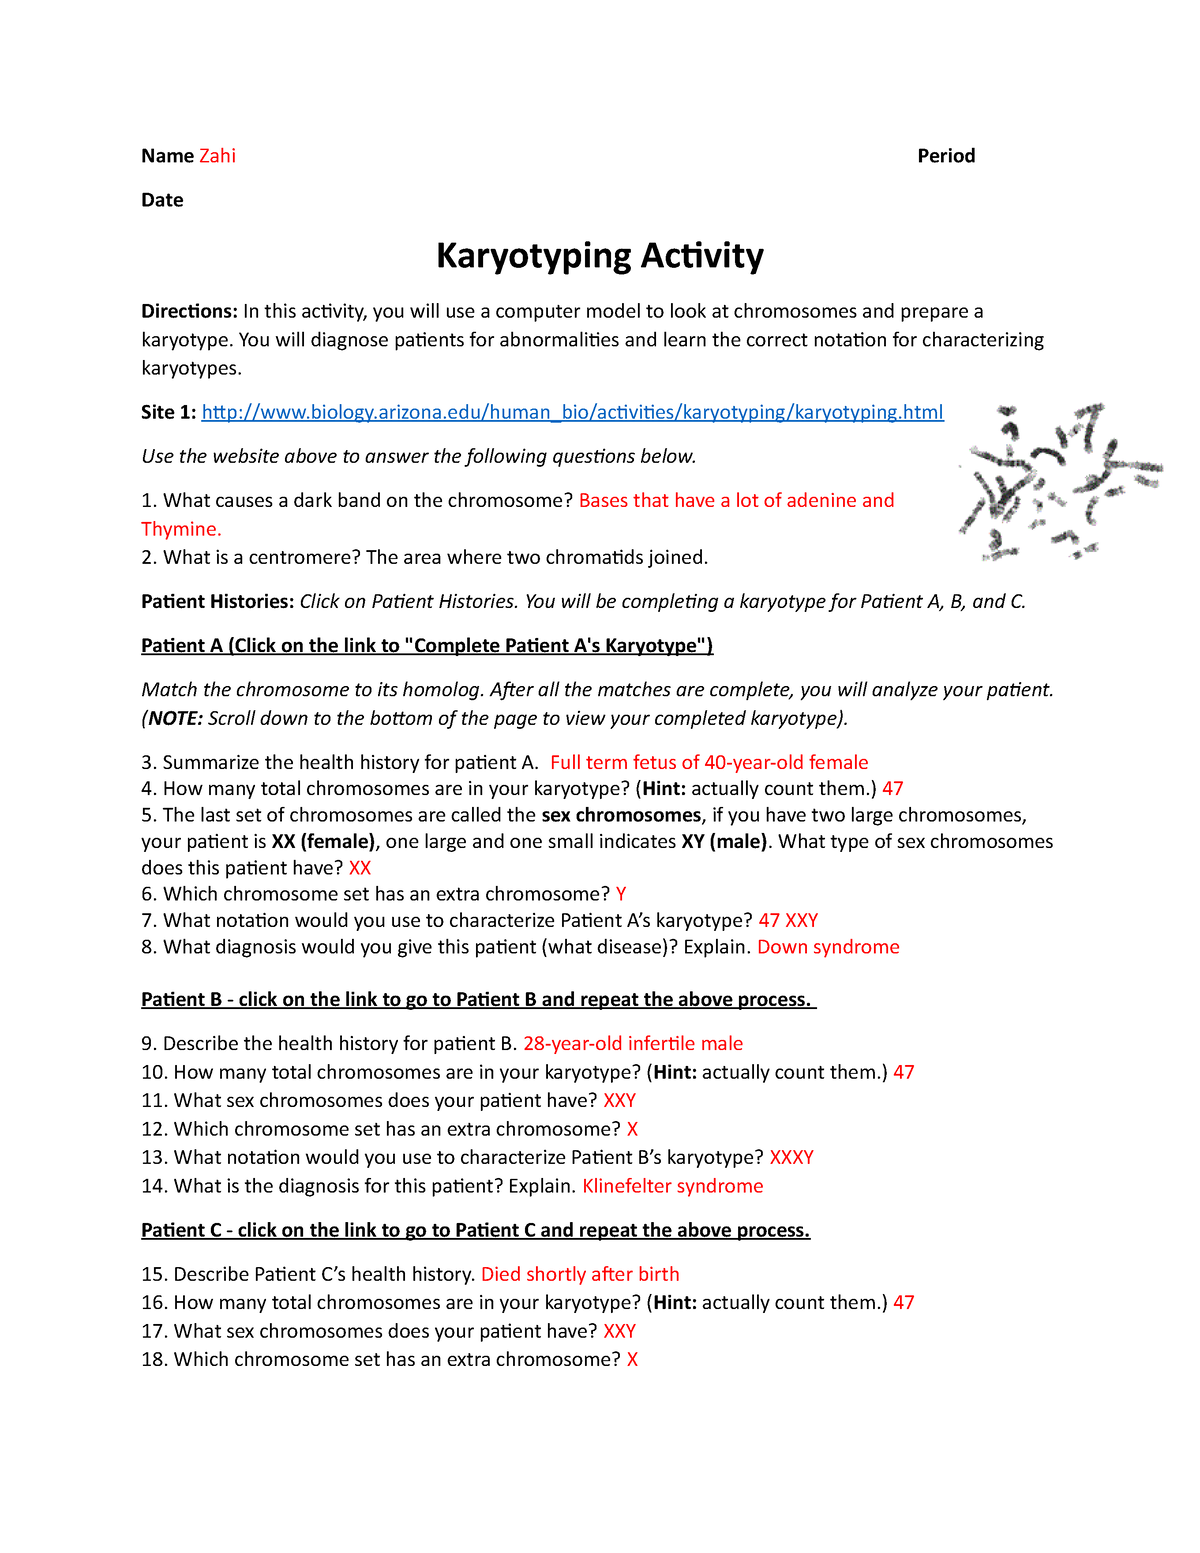 karyotyping-activity-mb-1-answer-key-name-zahi-period-date-karyotyping-activity-directions